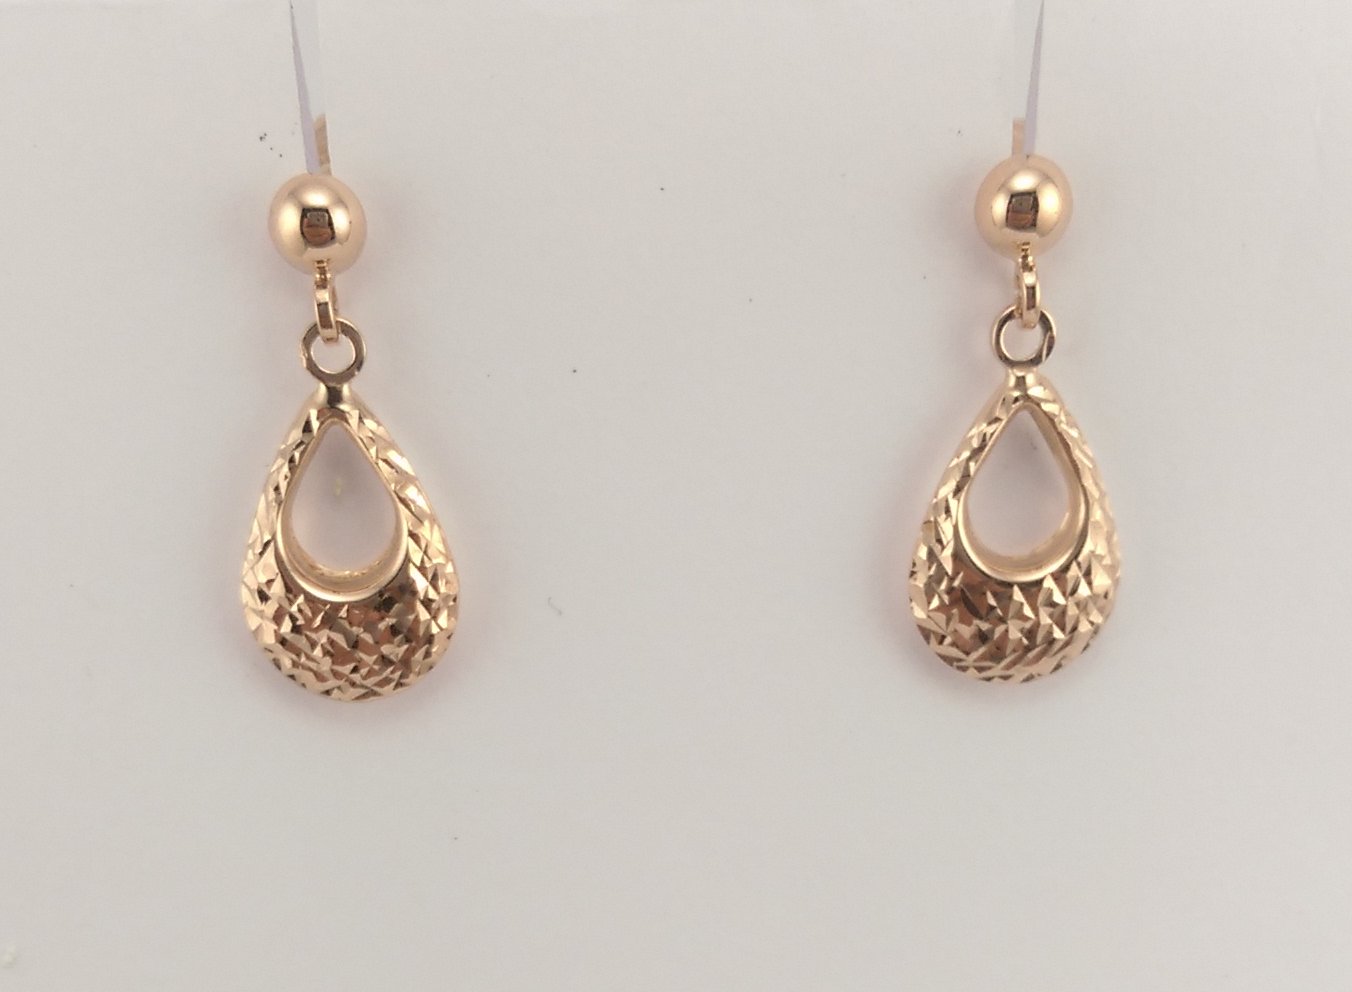 9ct Rose Gold Earrings -0